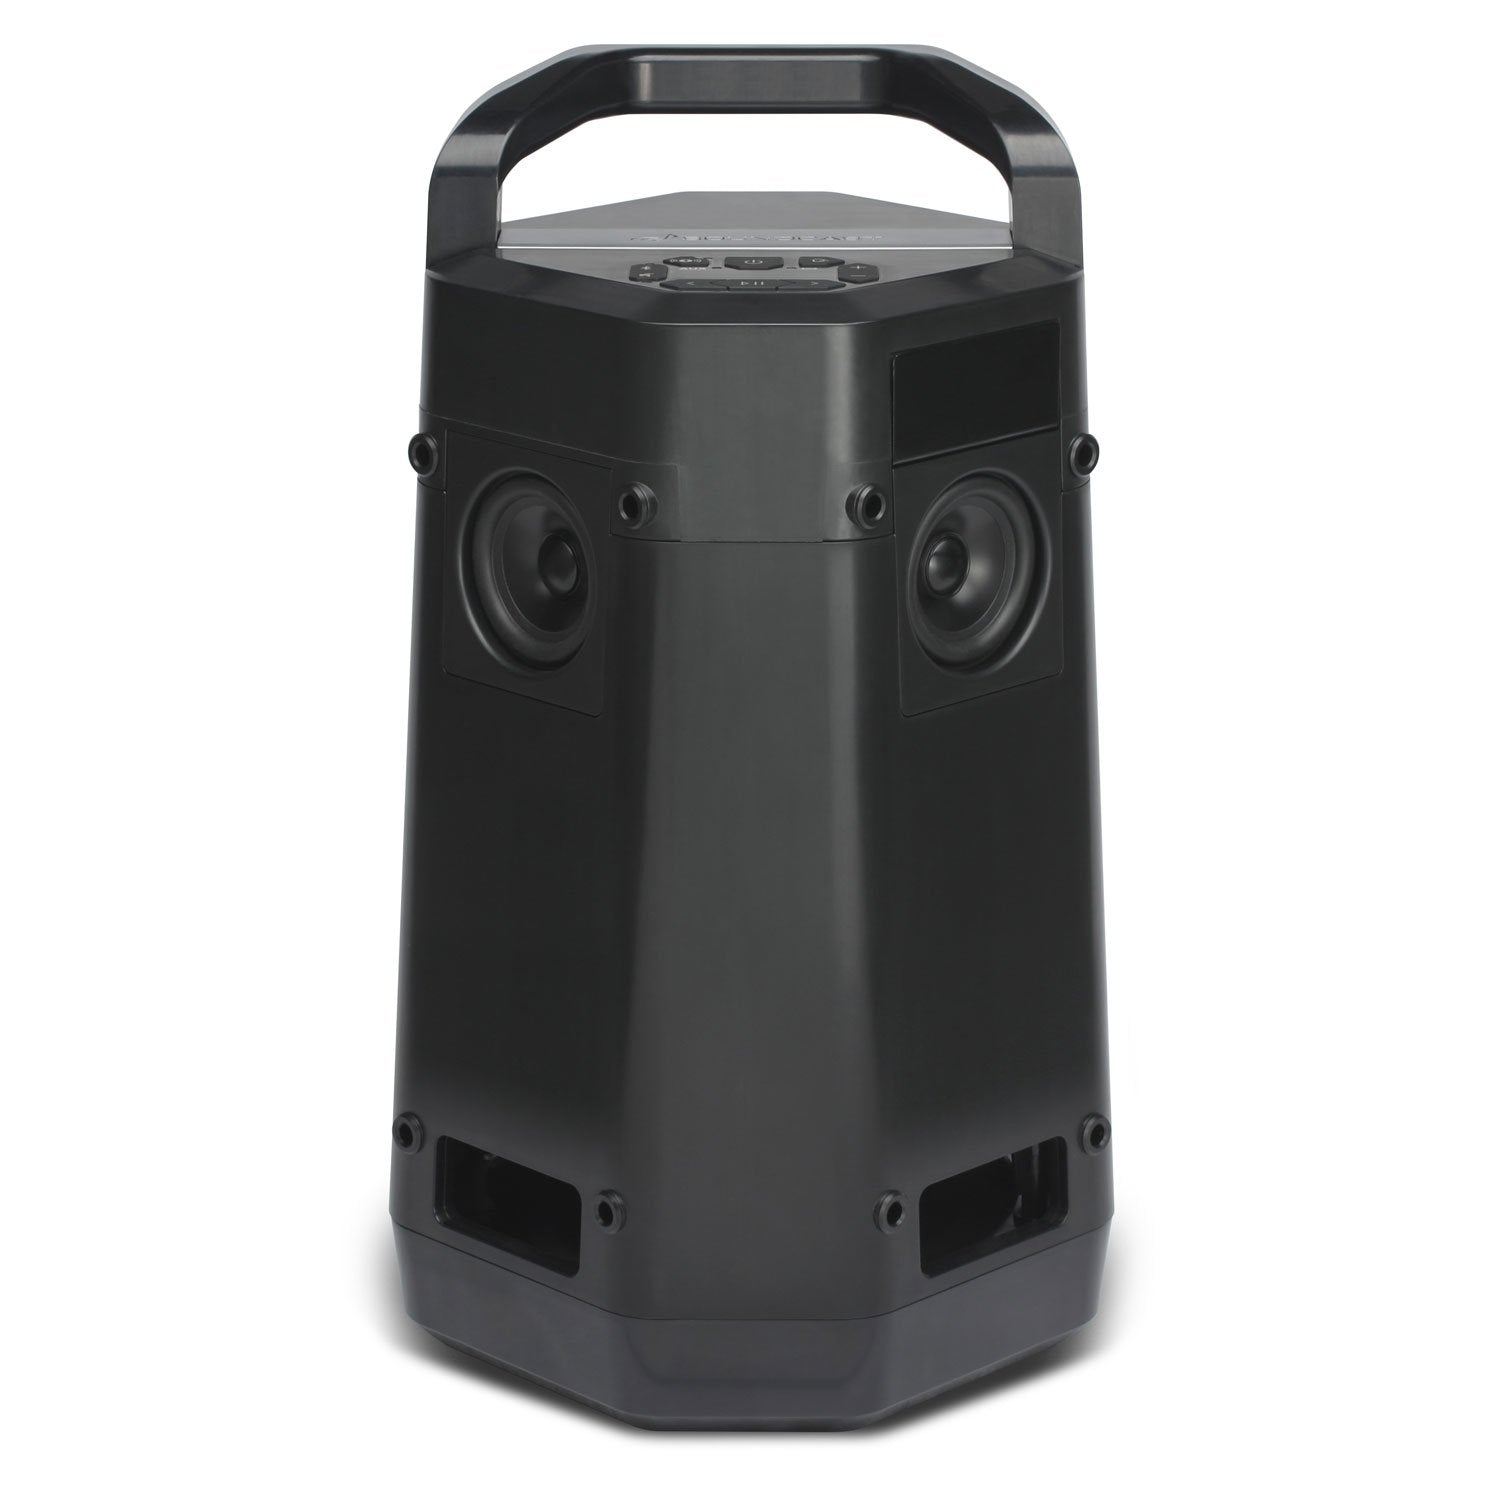 Soundcast VG7 Omni-Array Bluetooth Speaker with DSP - Kronos AV